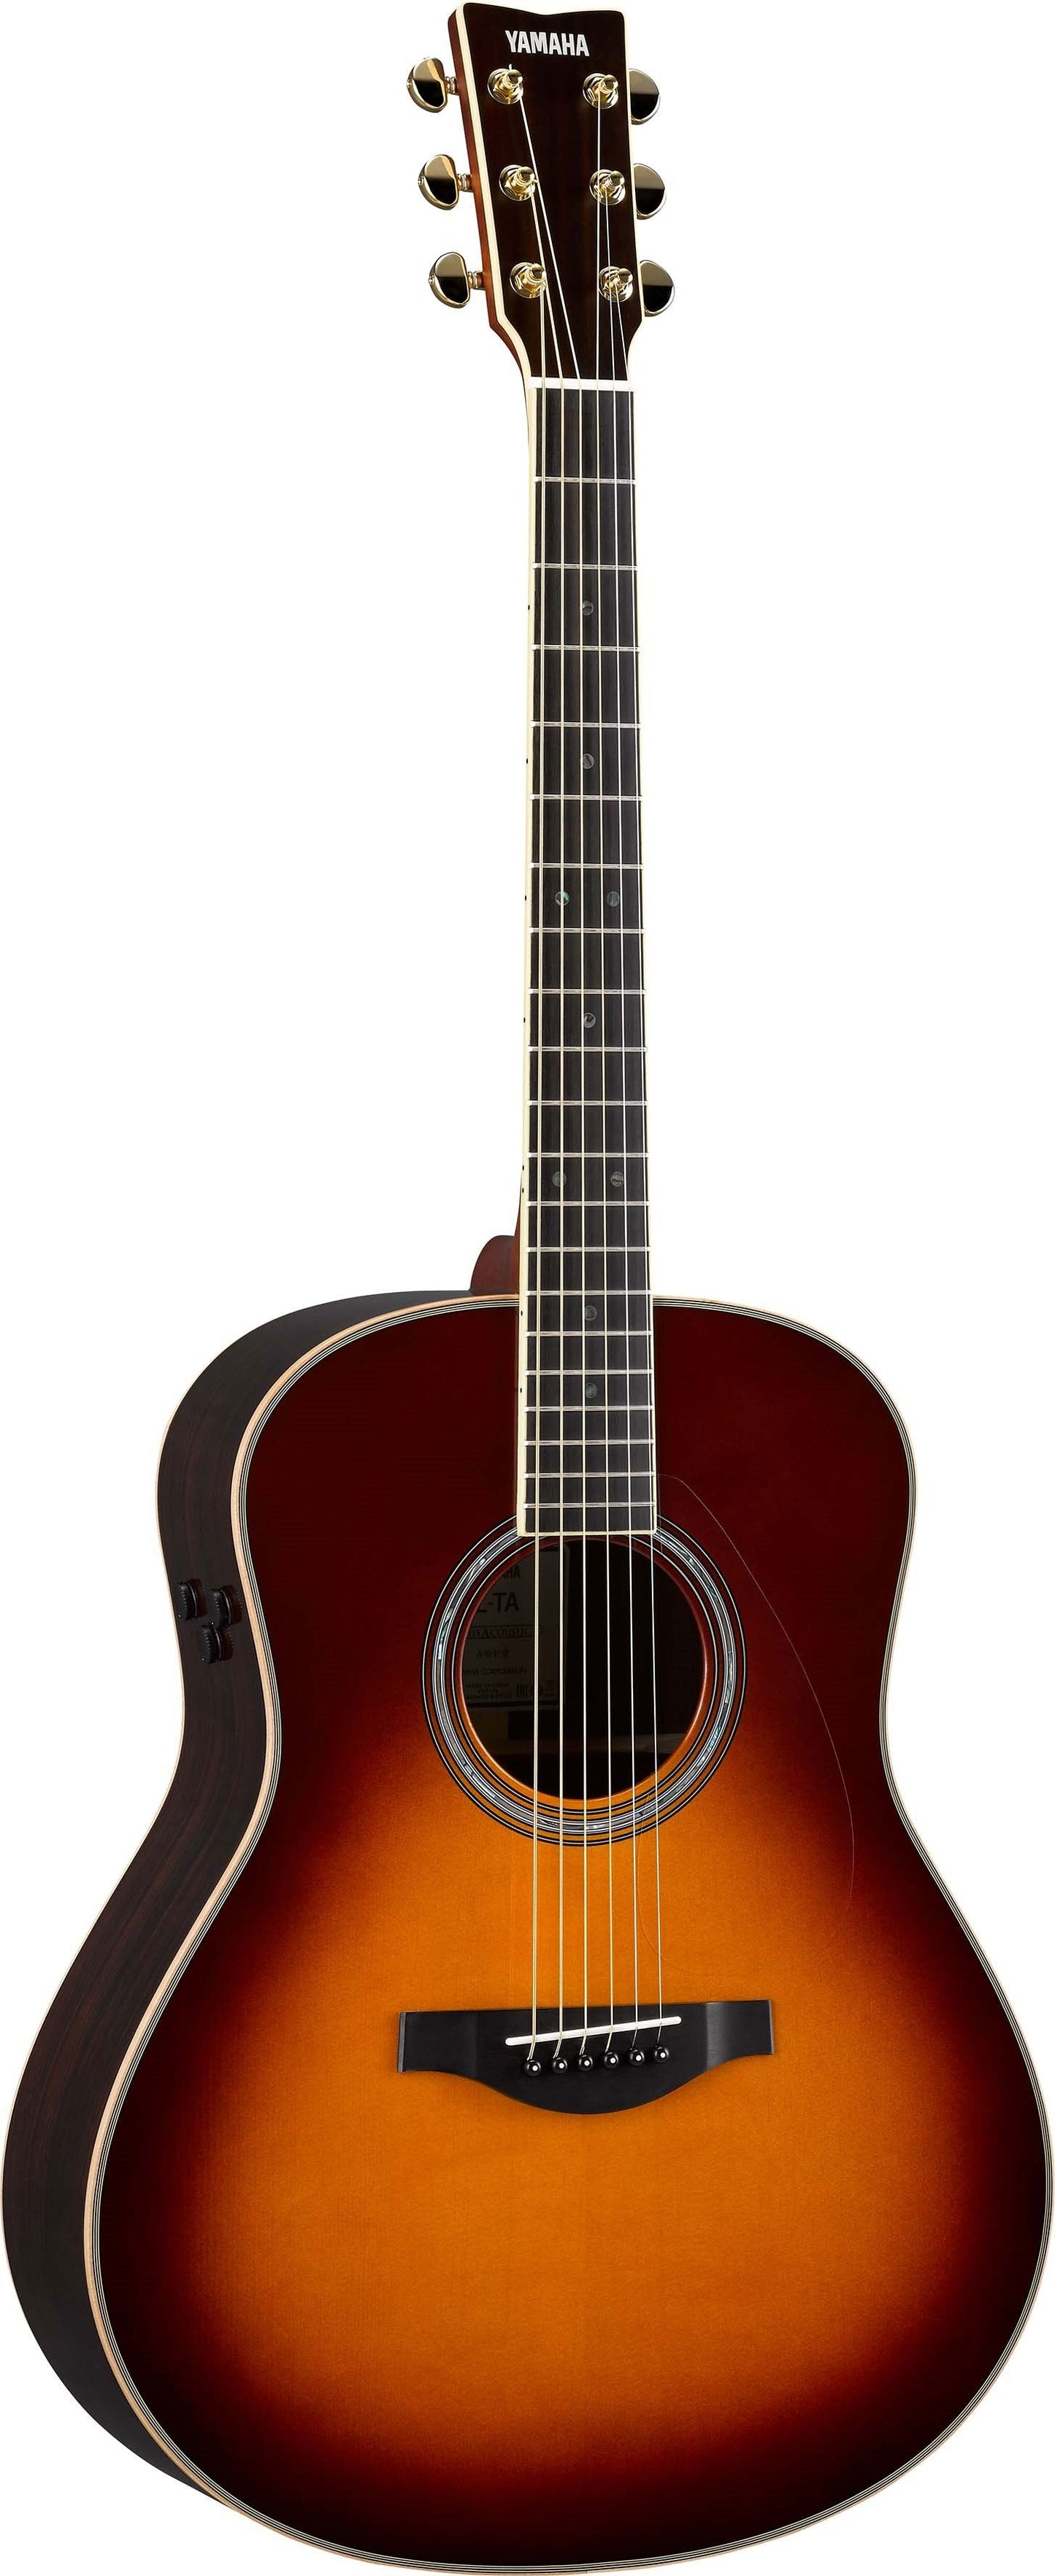 Yamaha TransAcoustic LLTA Guitar w/Pro Bag